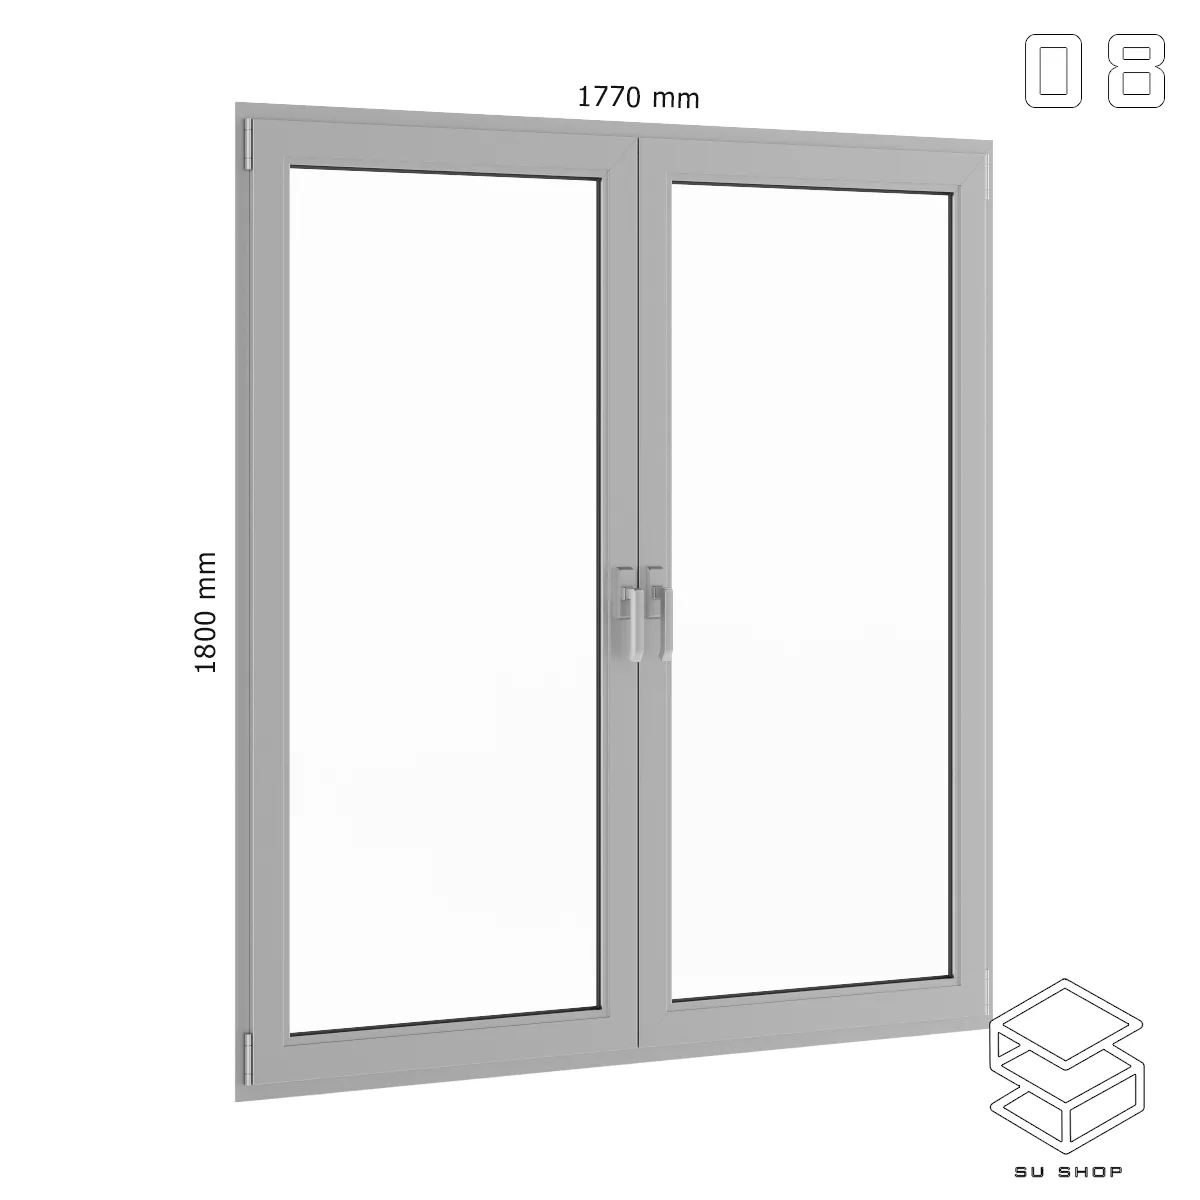 MODERN WINDOWS - SKETCHUP 3D MODEL - VRAY OR ENSCAPE - ID16796